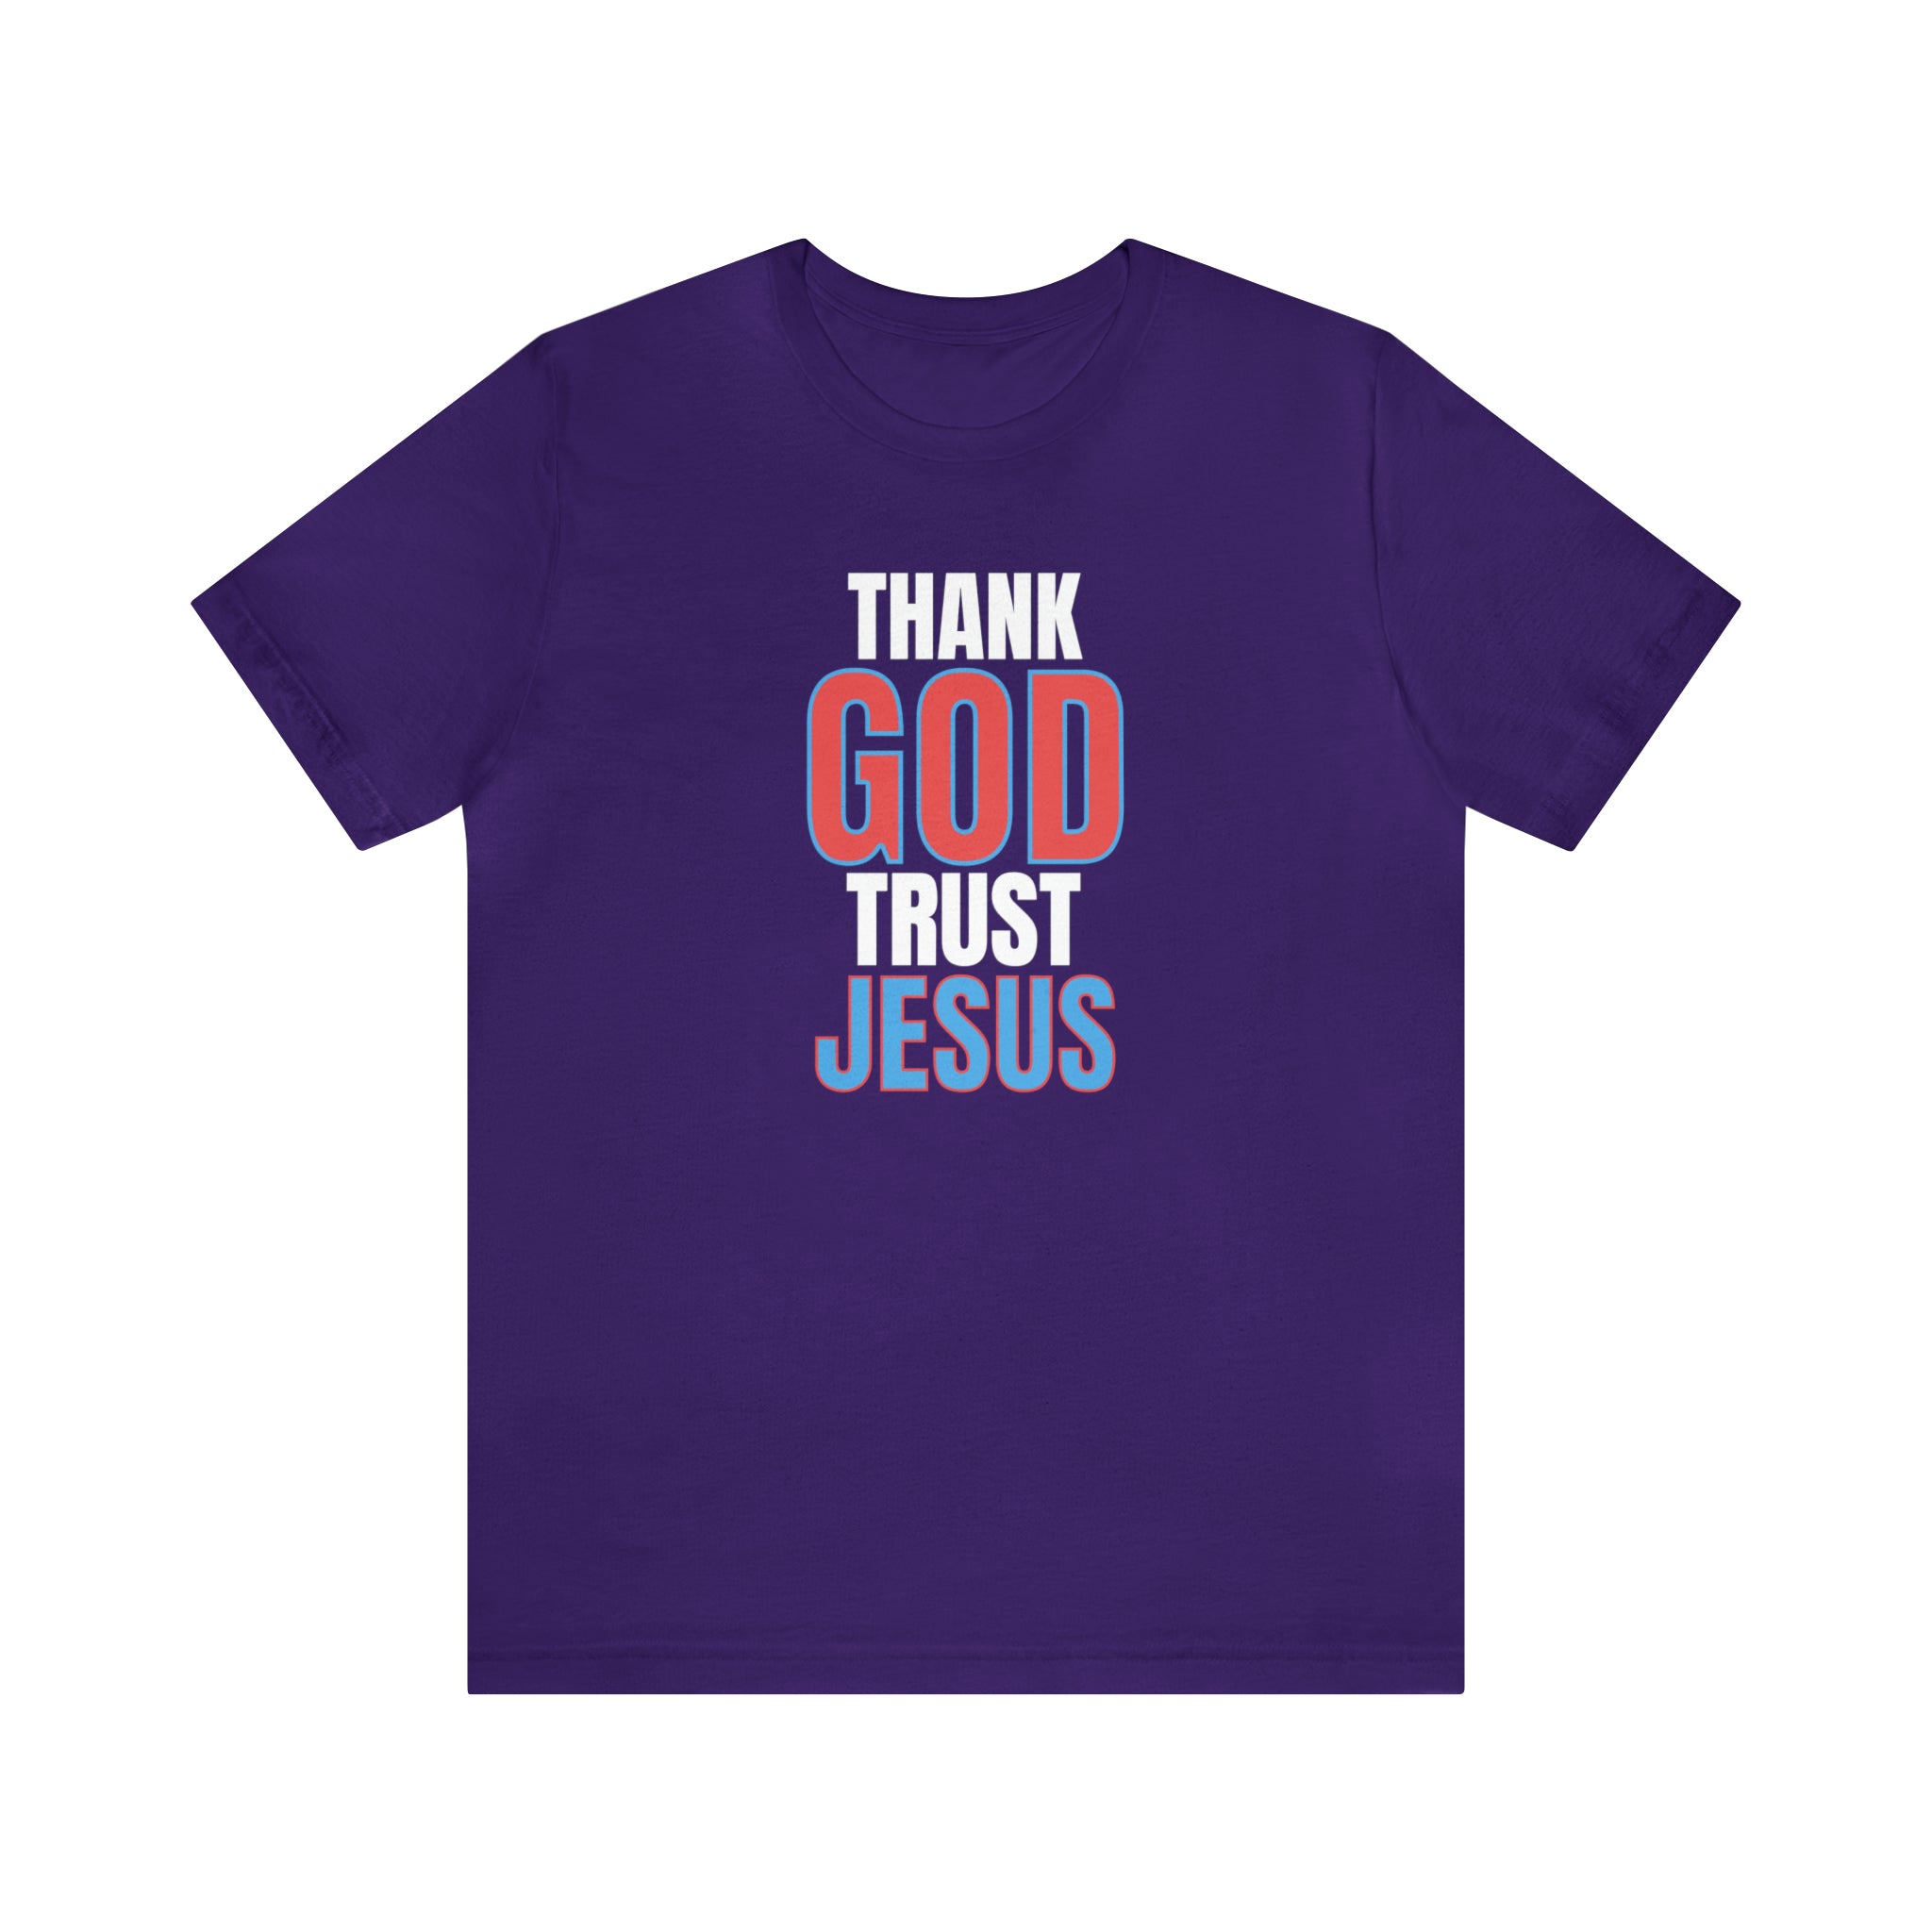 Thank God, Trust Jesus T-Shirt Faith-Inspired Tee Bold Design - Encore2woTeam PurpleXL